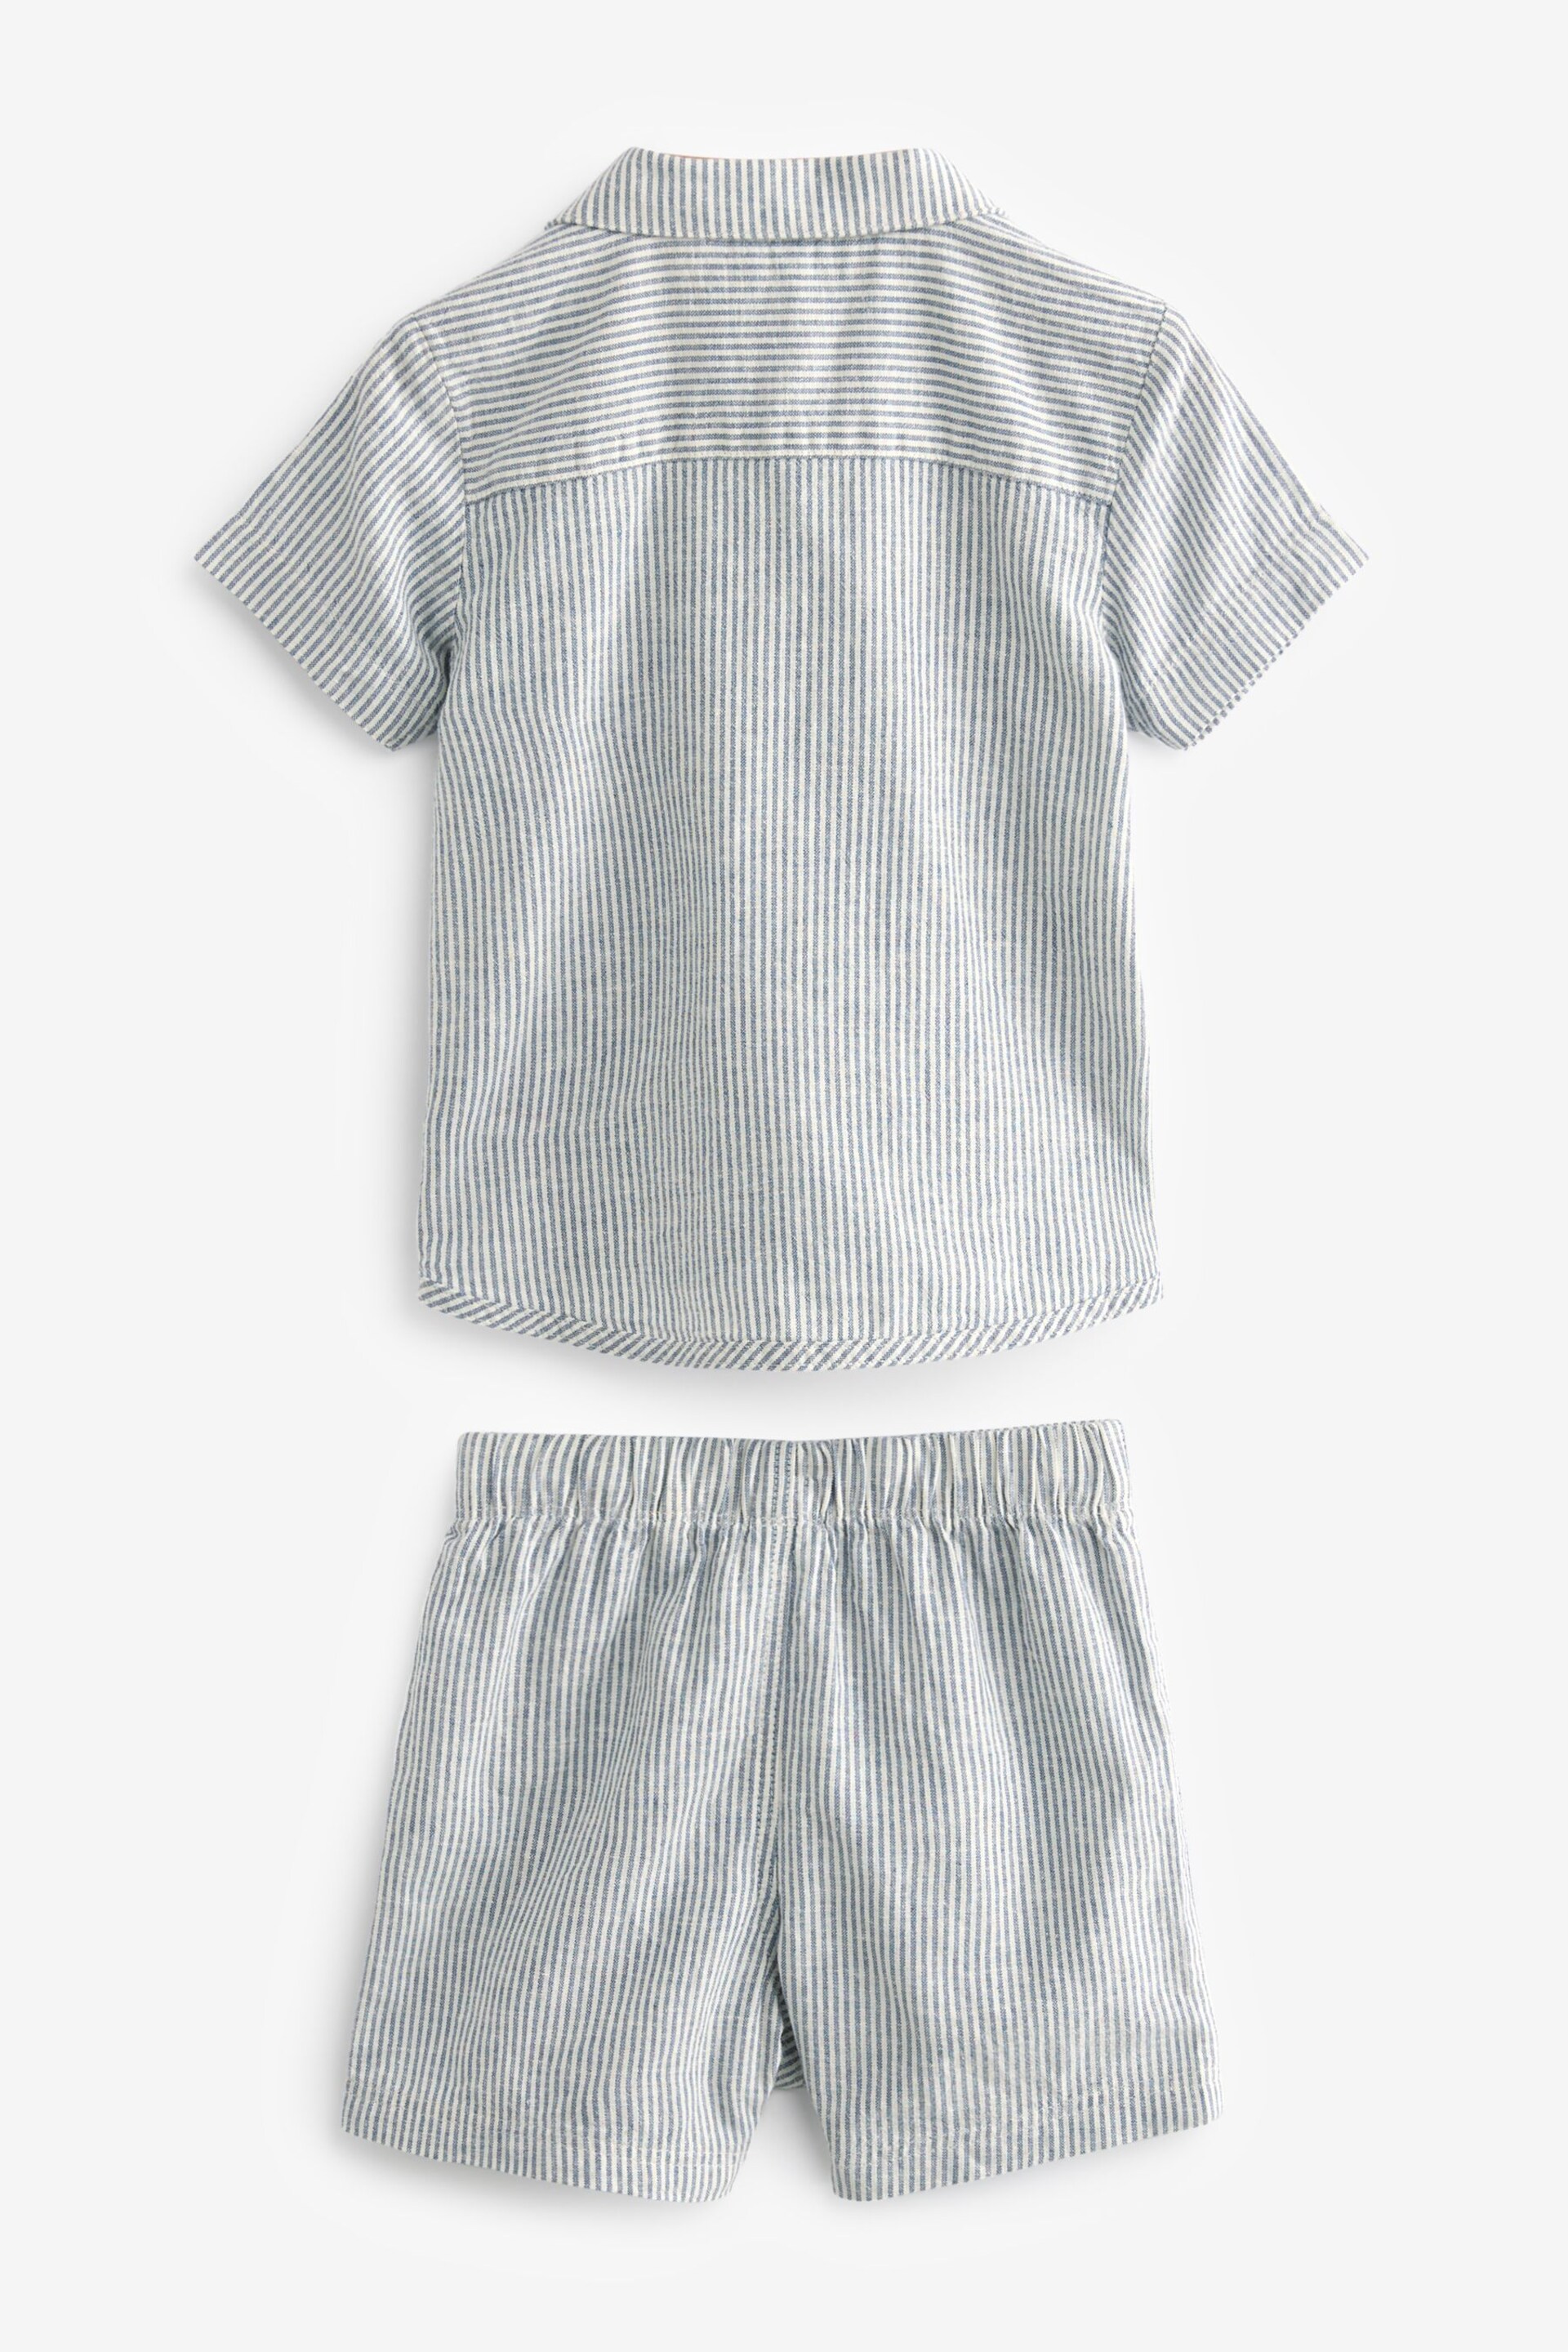 Blue/White Stripe Button Down Short Woven Pyjamas (9mths-8yrs) - Image 6 of 8